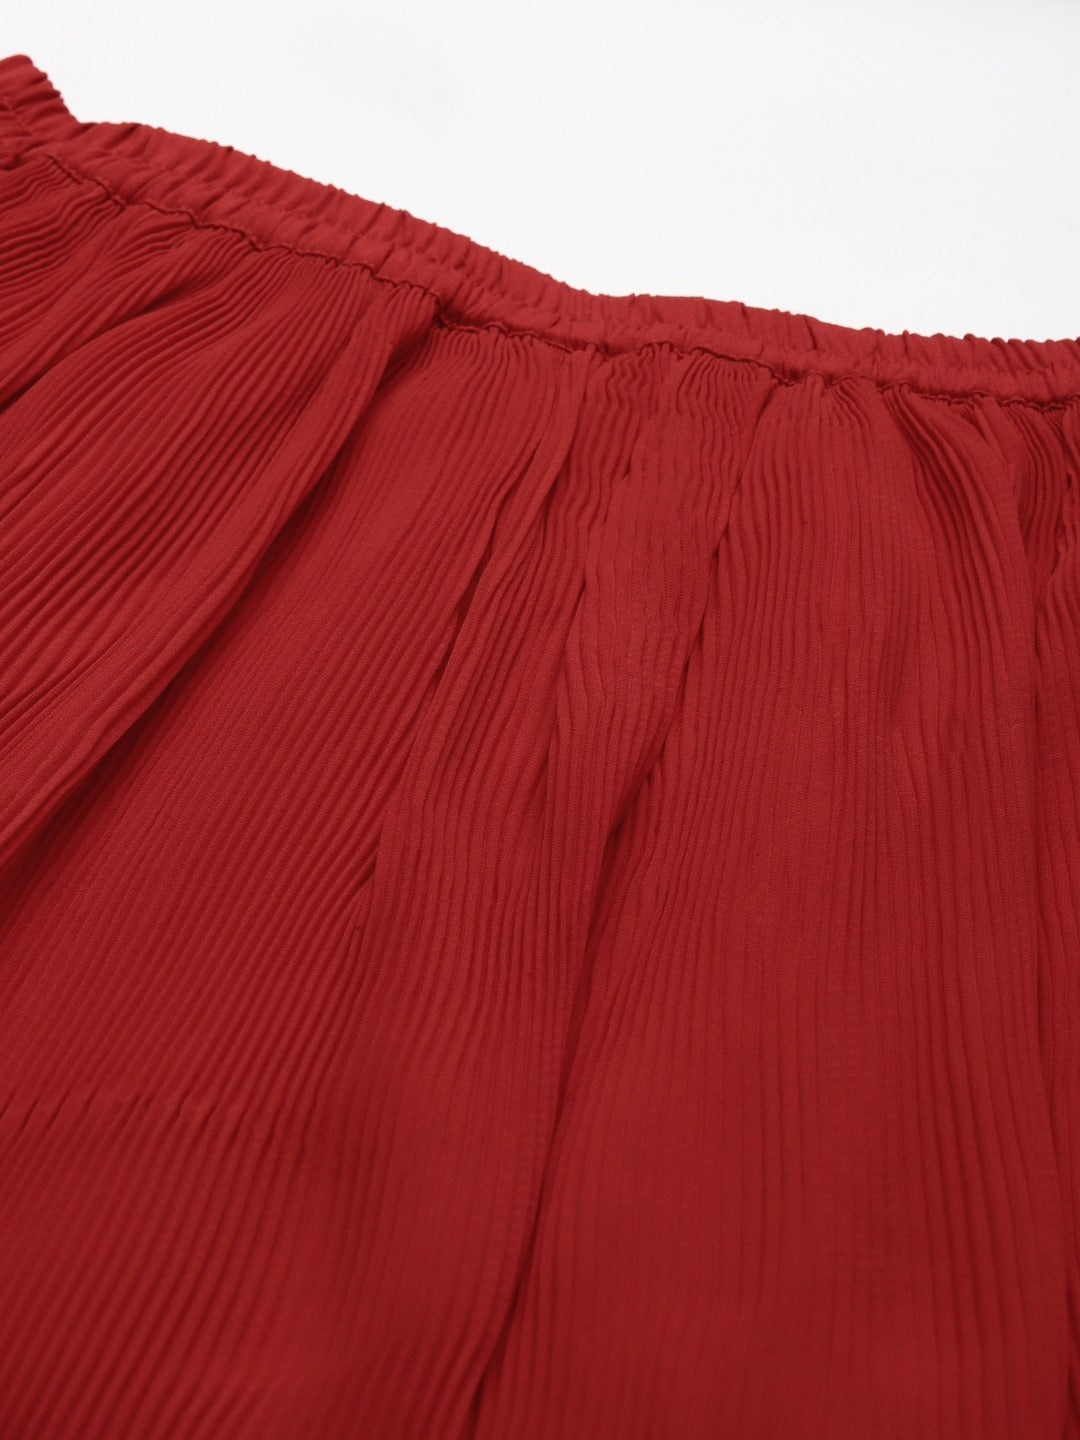 Cottinfab Women Red Solid Plisse Flared Skirt